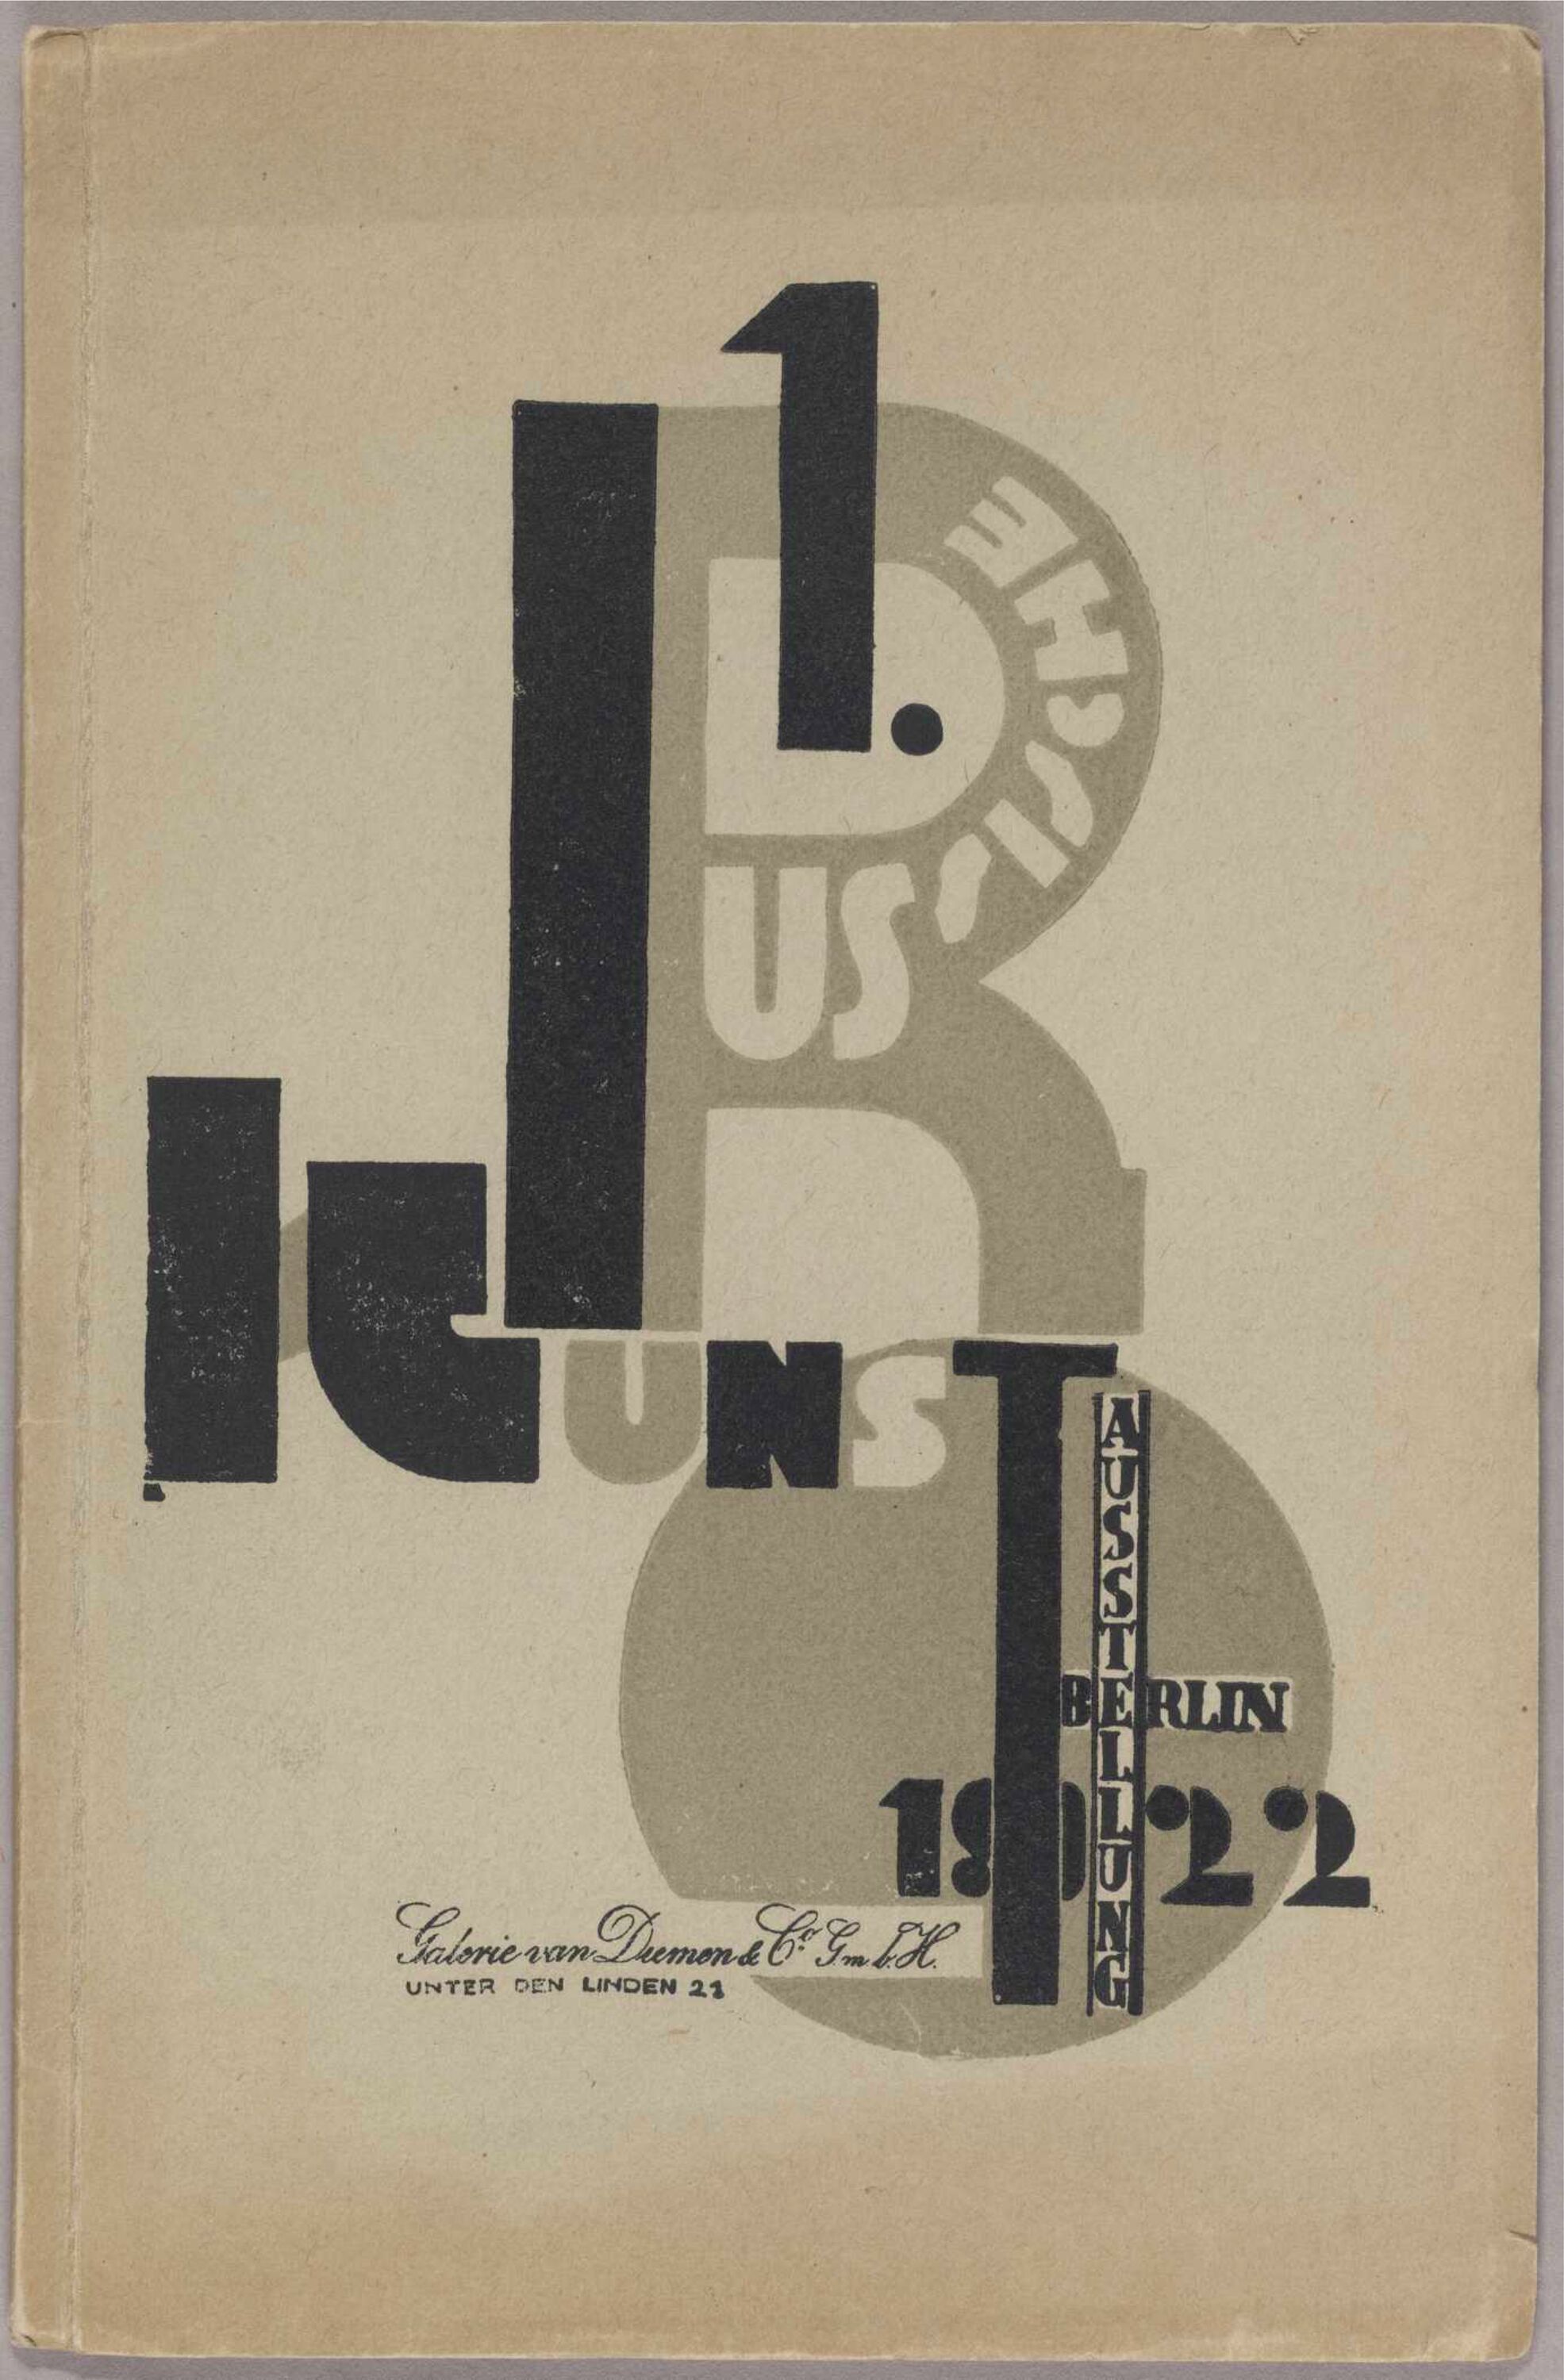 ‘Berlin Sees Bizarre Russian Art Show’: The Press Coverage of the Erste Russische Kunstausstellung (1922) and the Perception of Russia’s Modernist Art